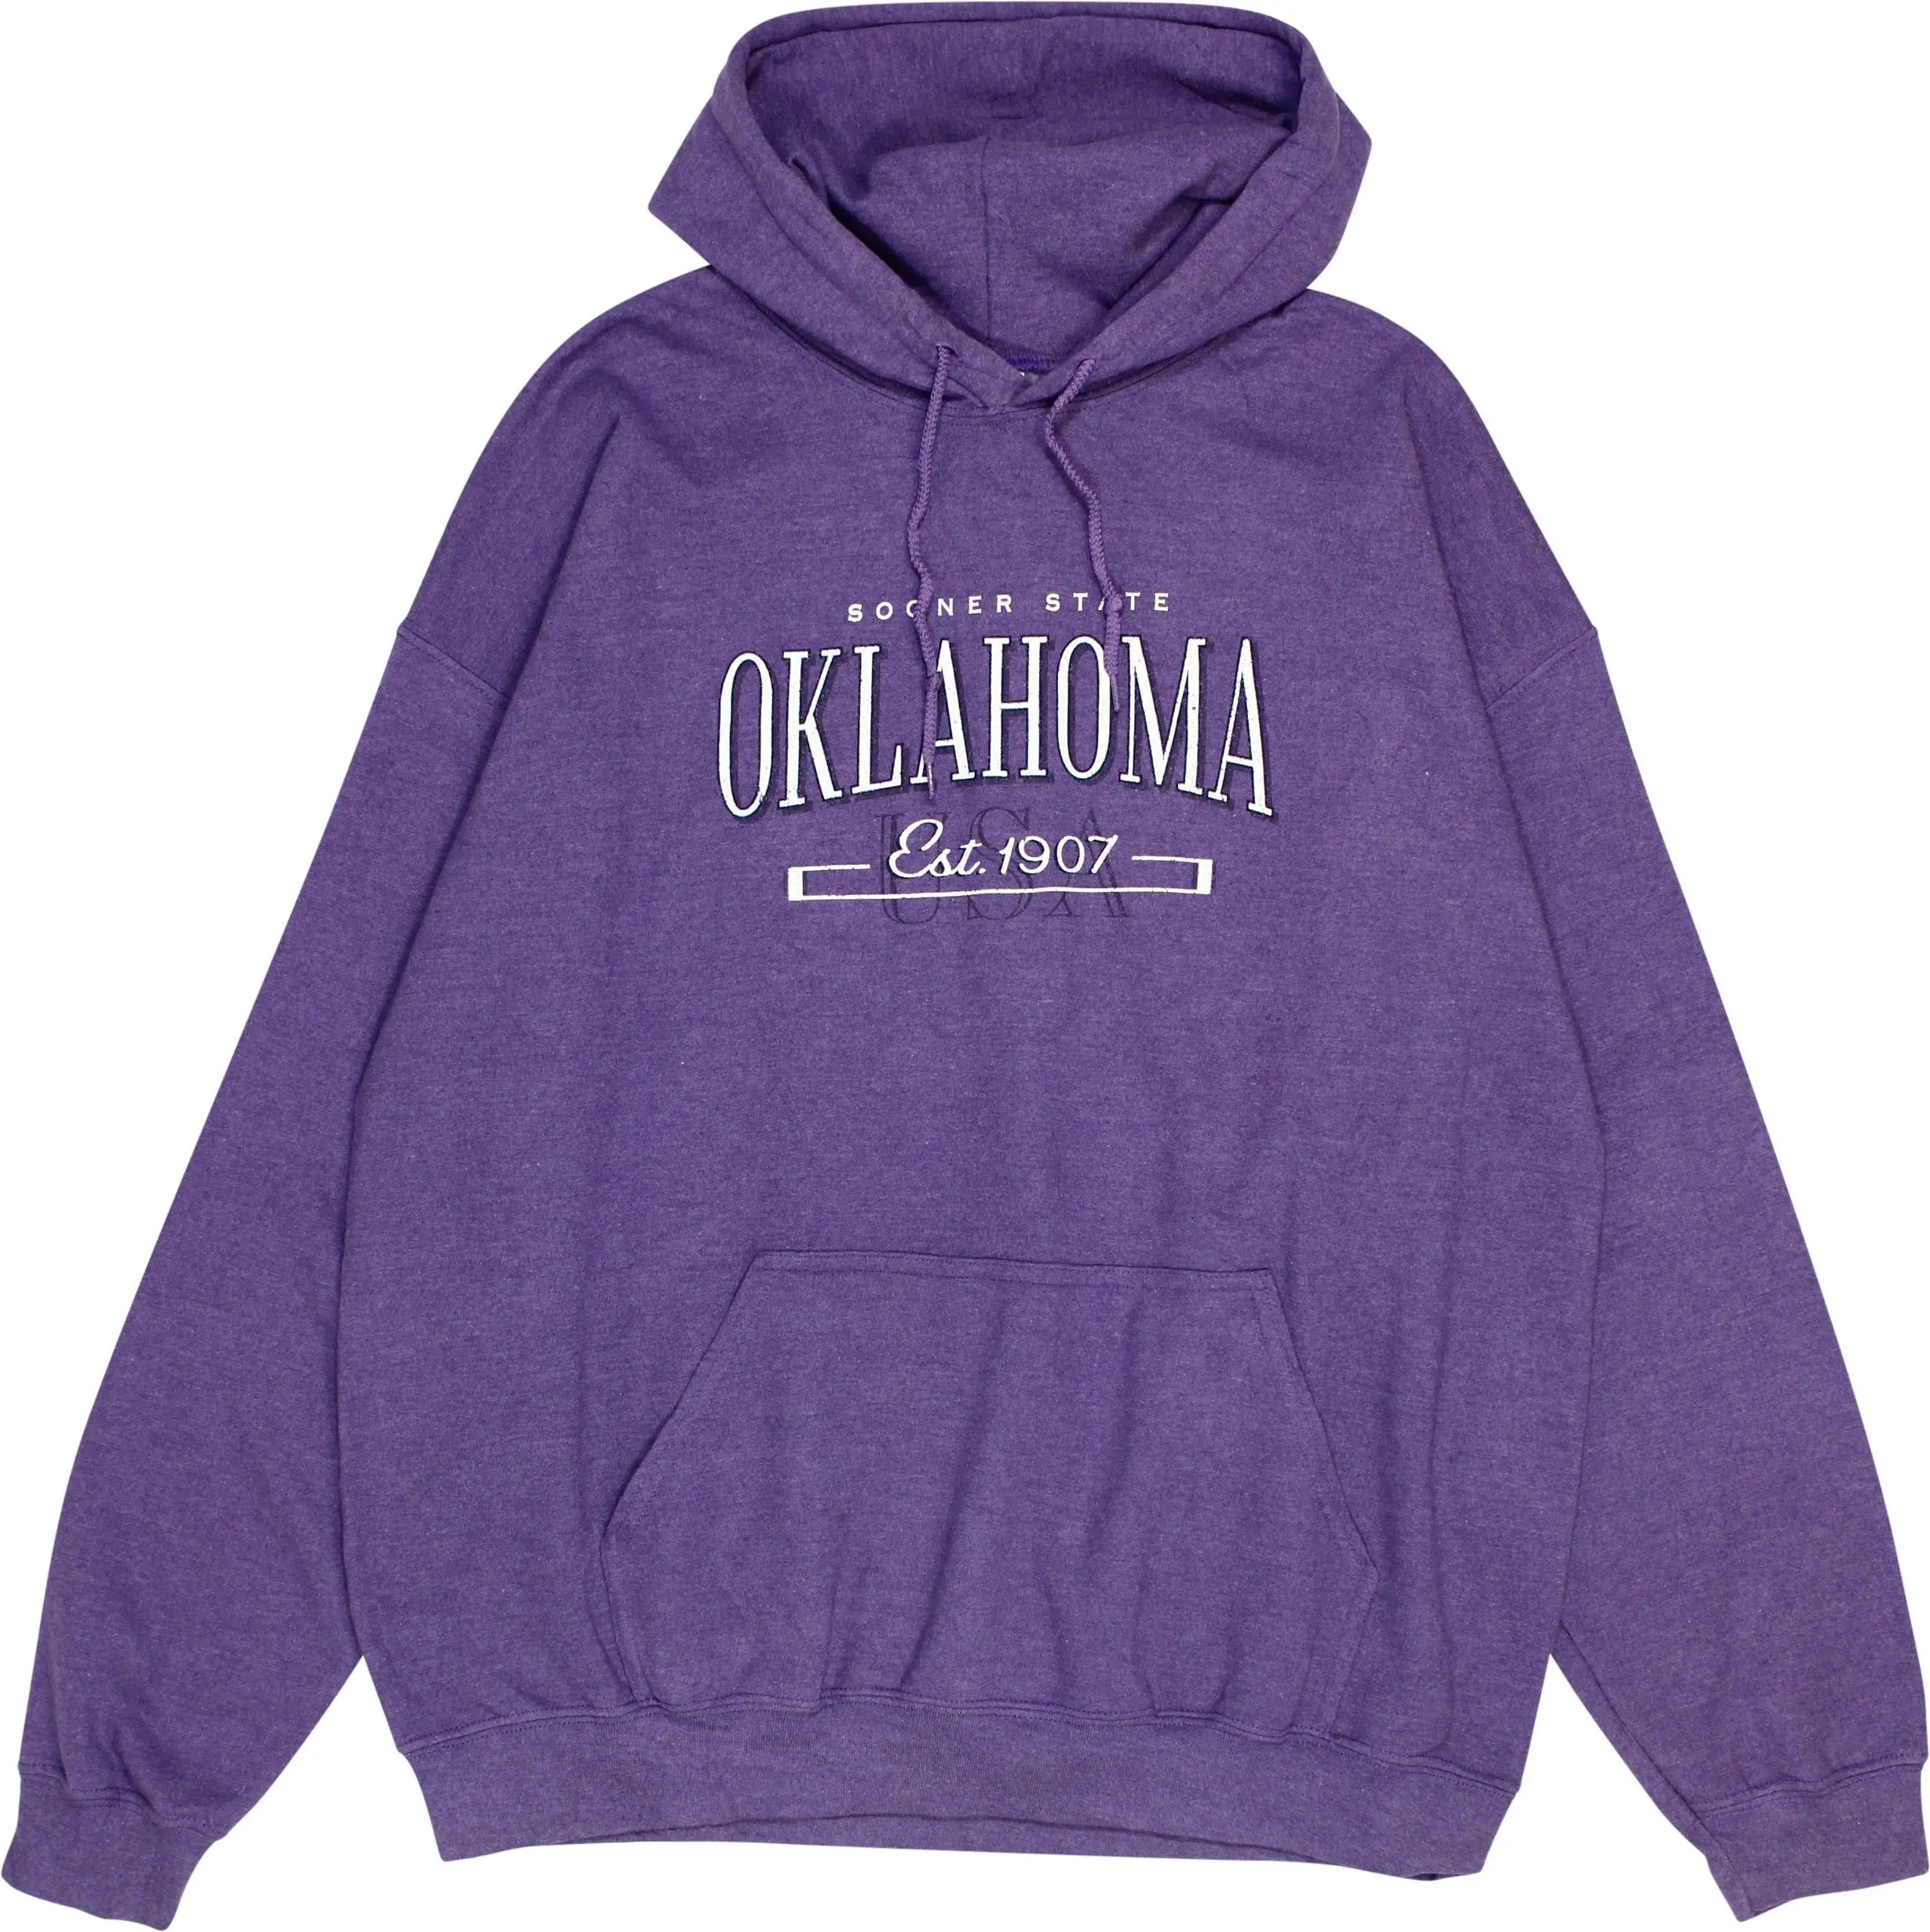 Gildan - Sooner State Oklahoma Hoodie- ThriftTale.com - Vintage and second handclothing